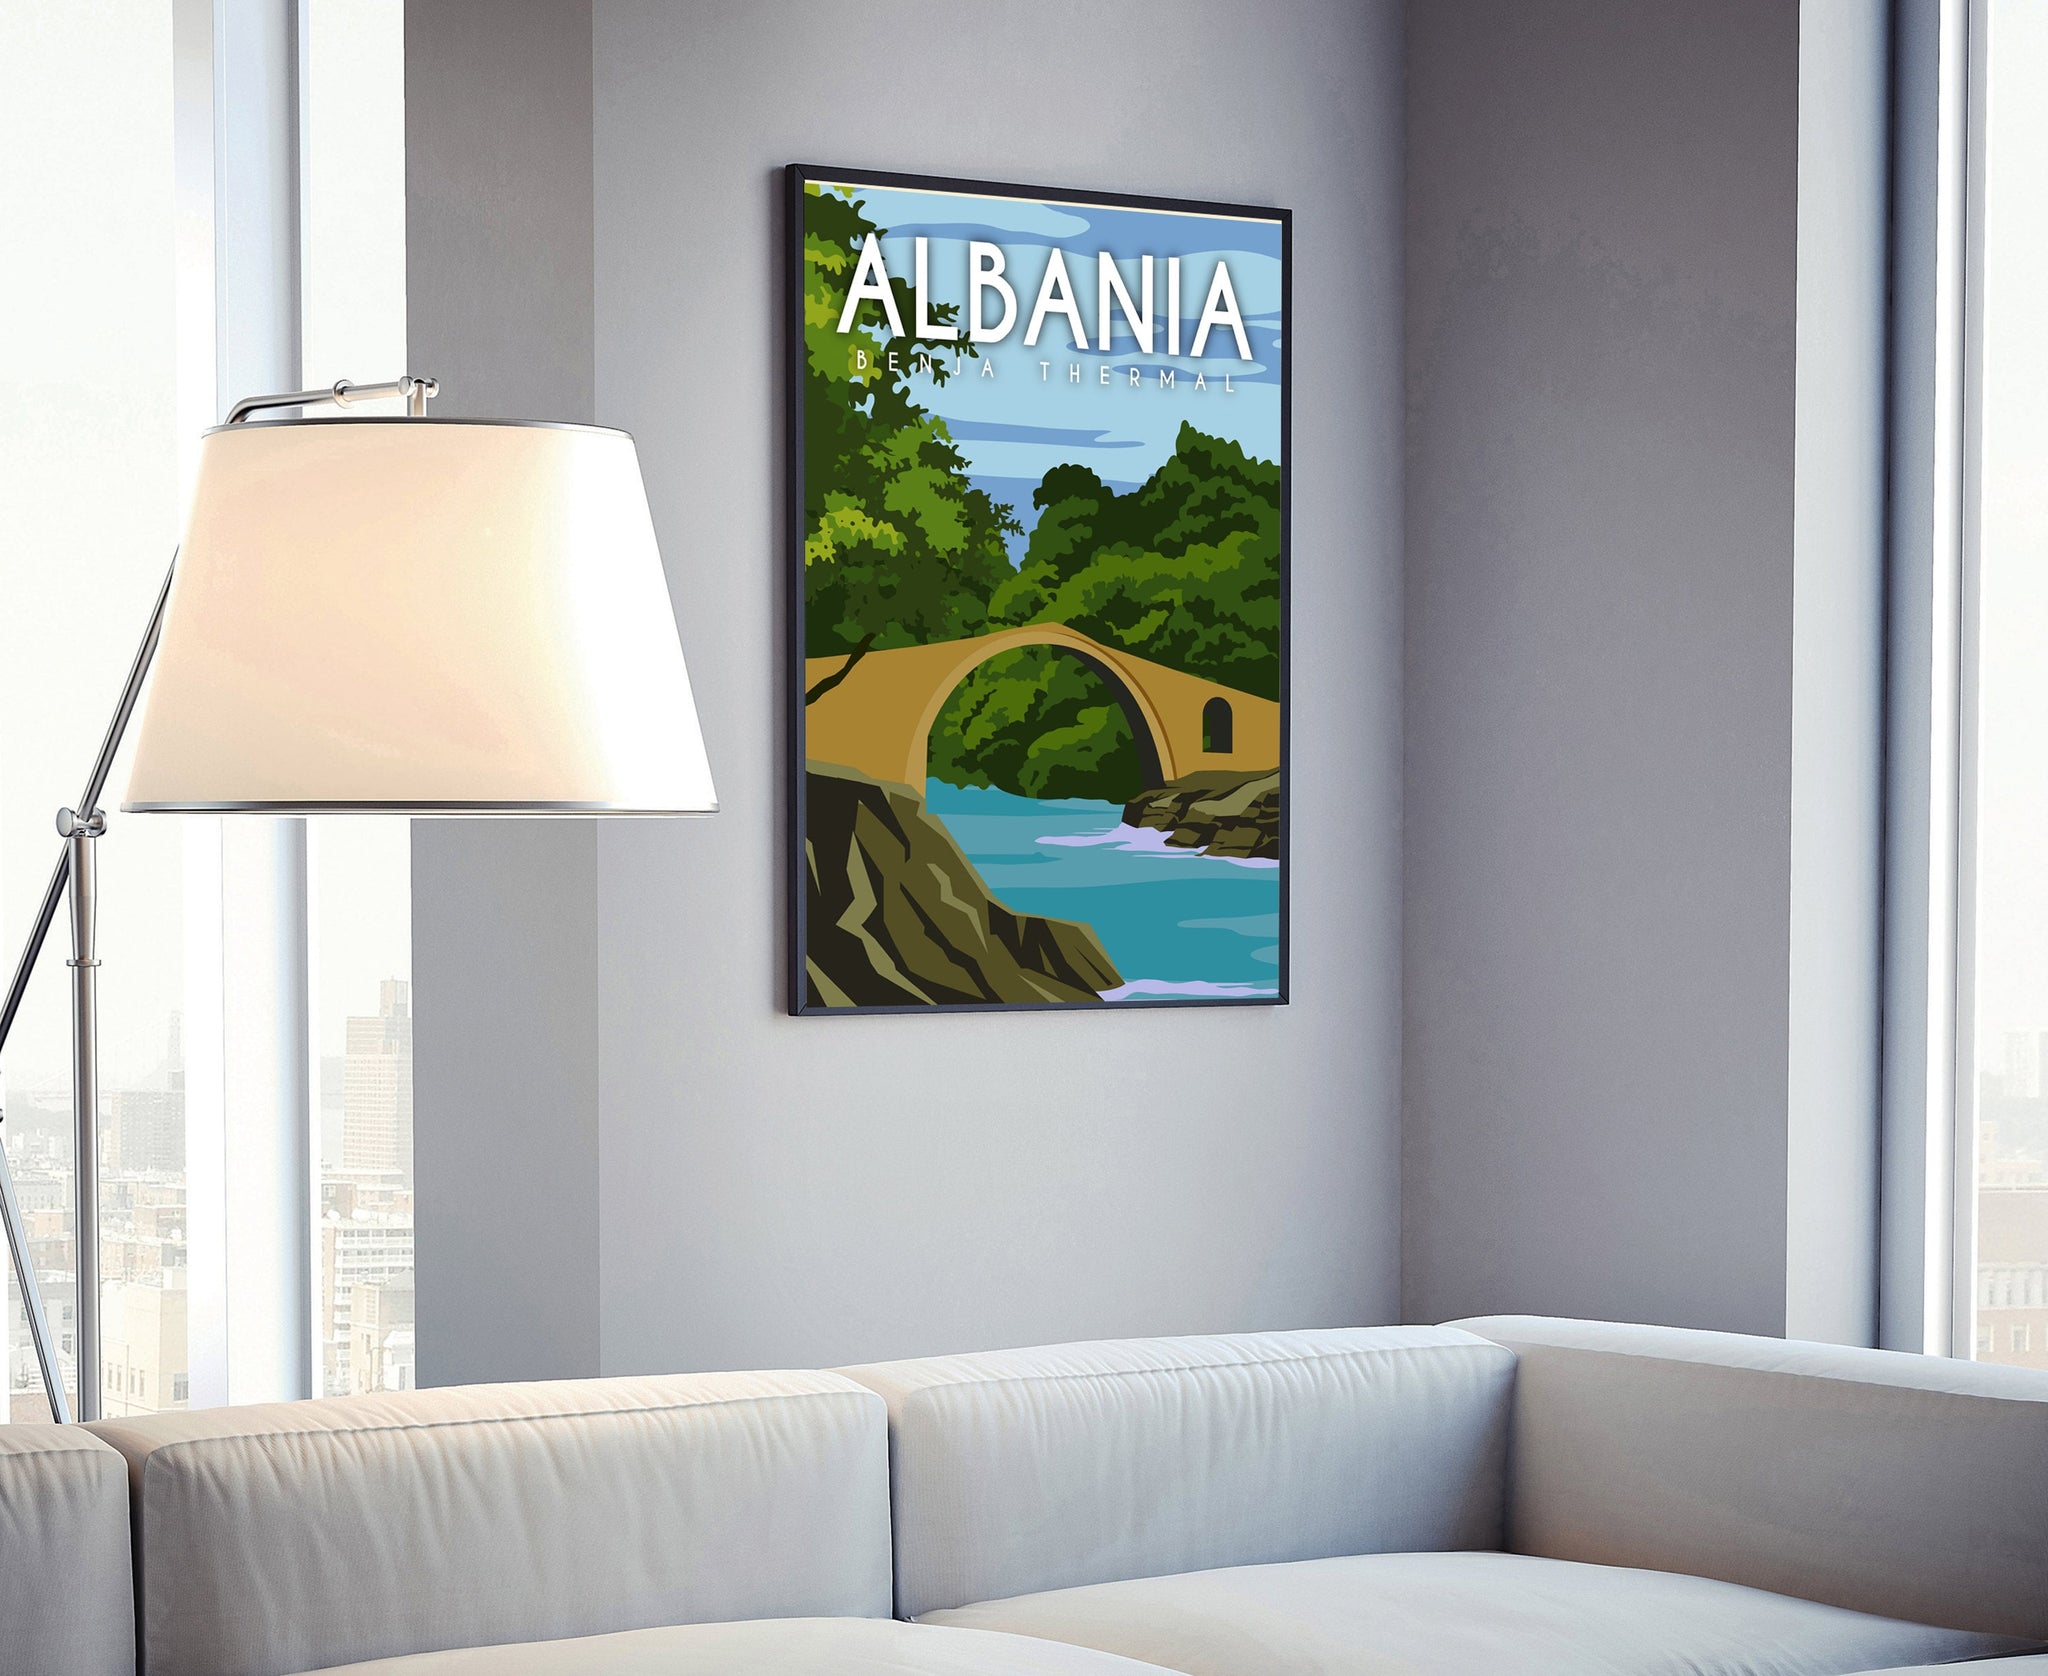 ALBANIA Benja Thermal traditional travel print, Albania poster artwork, Country Retro travel poster print home decoration, Housewarming Gift